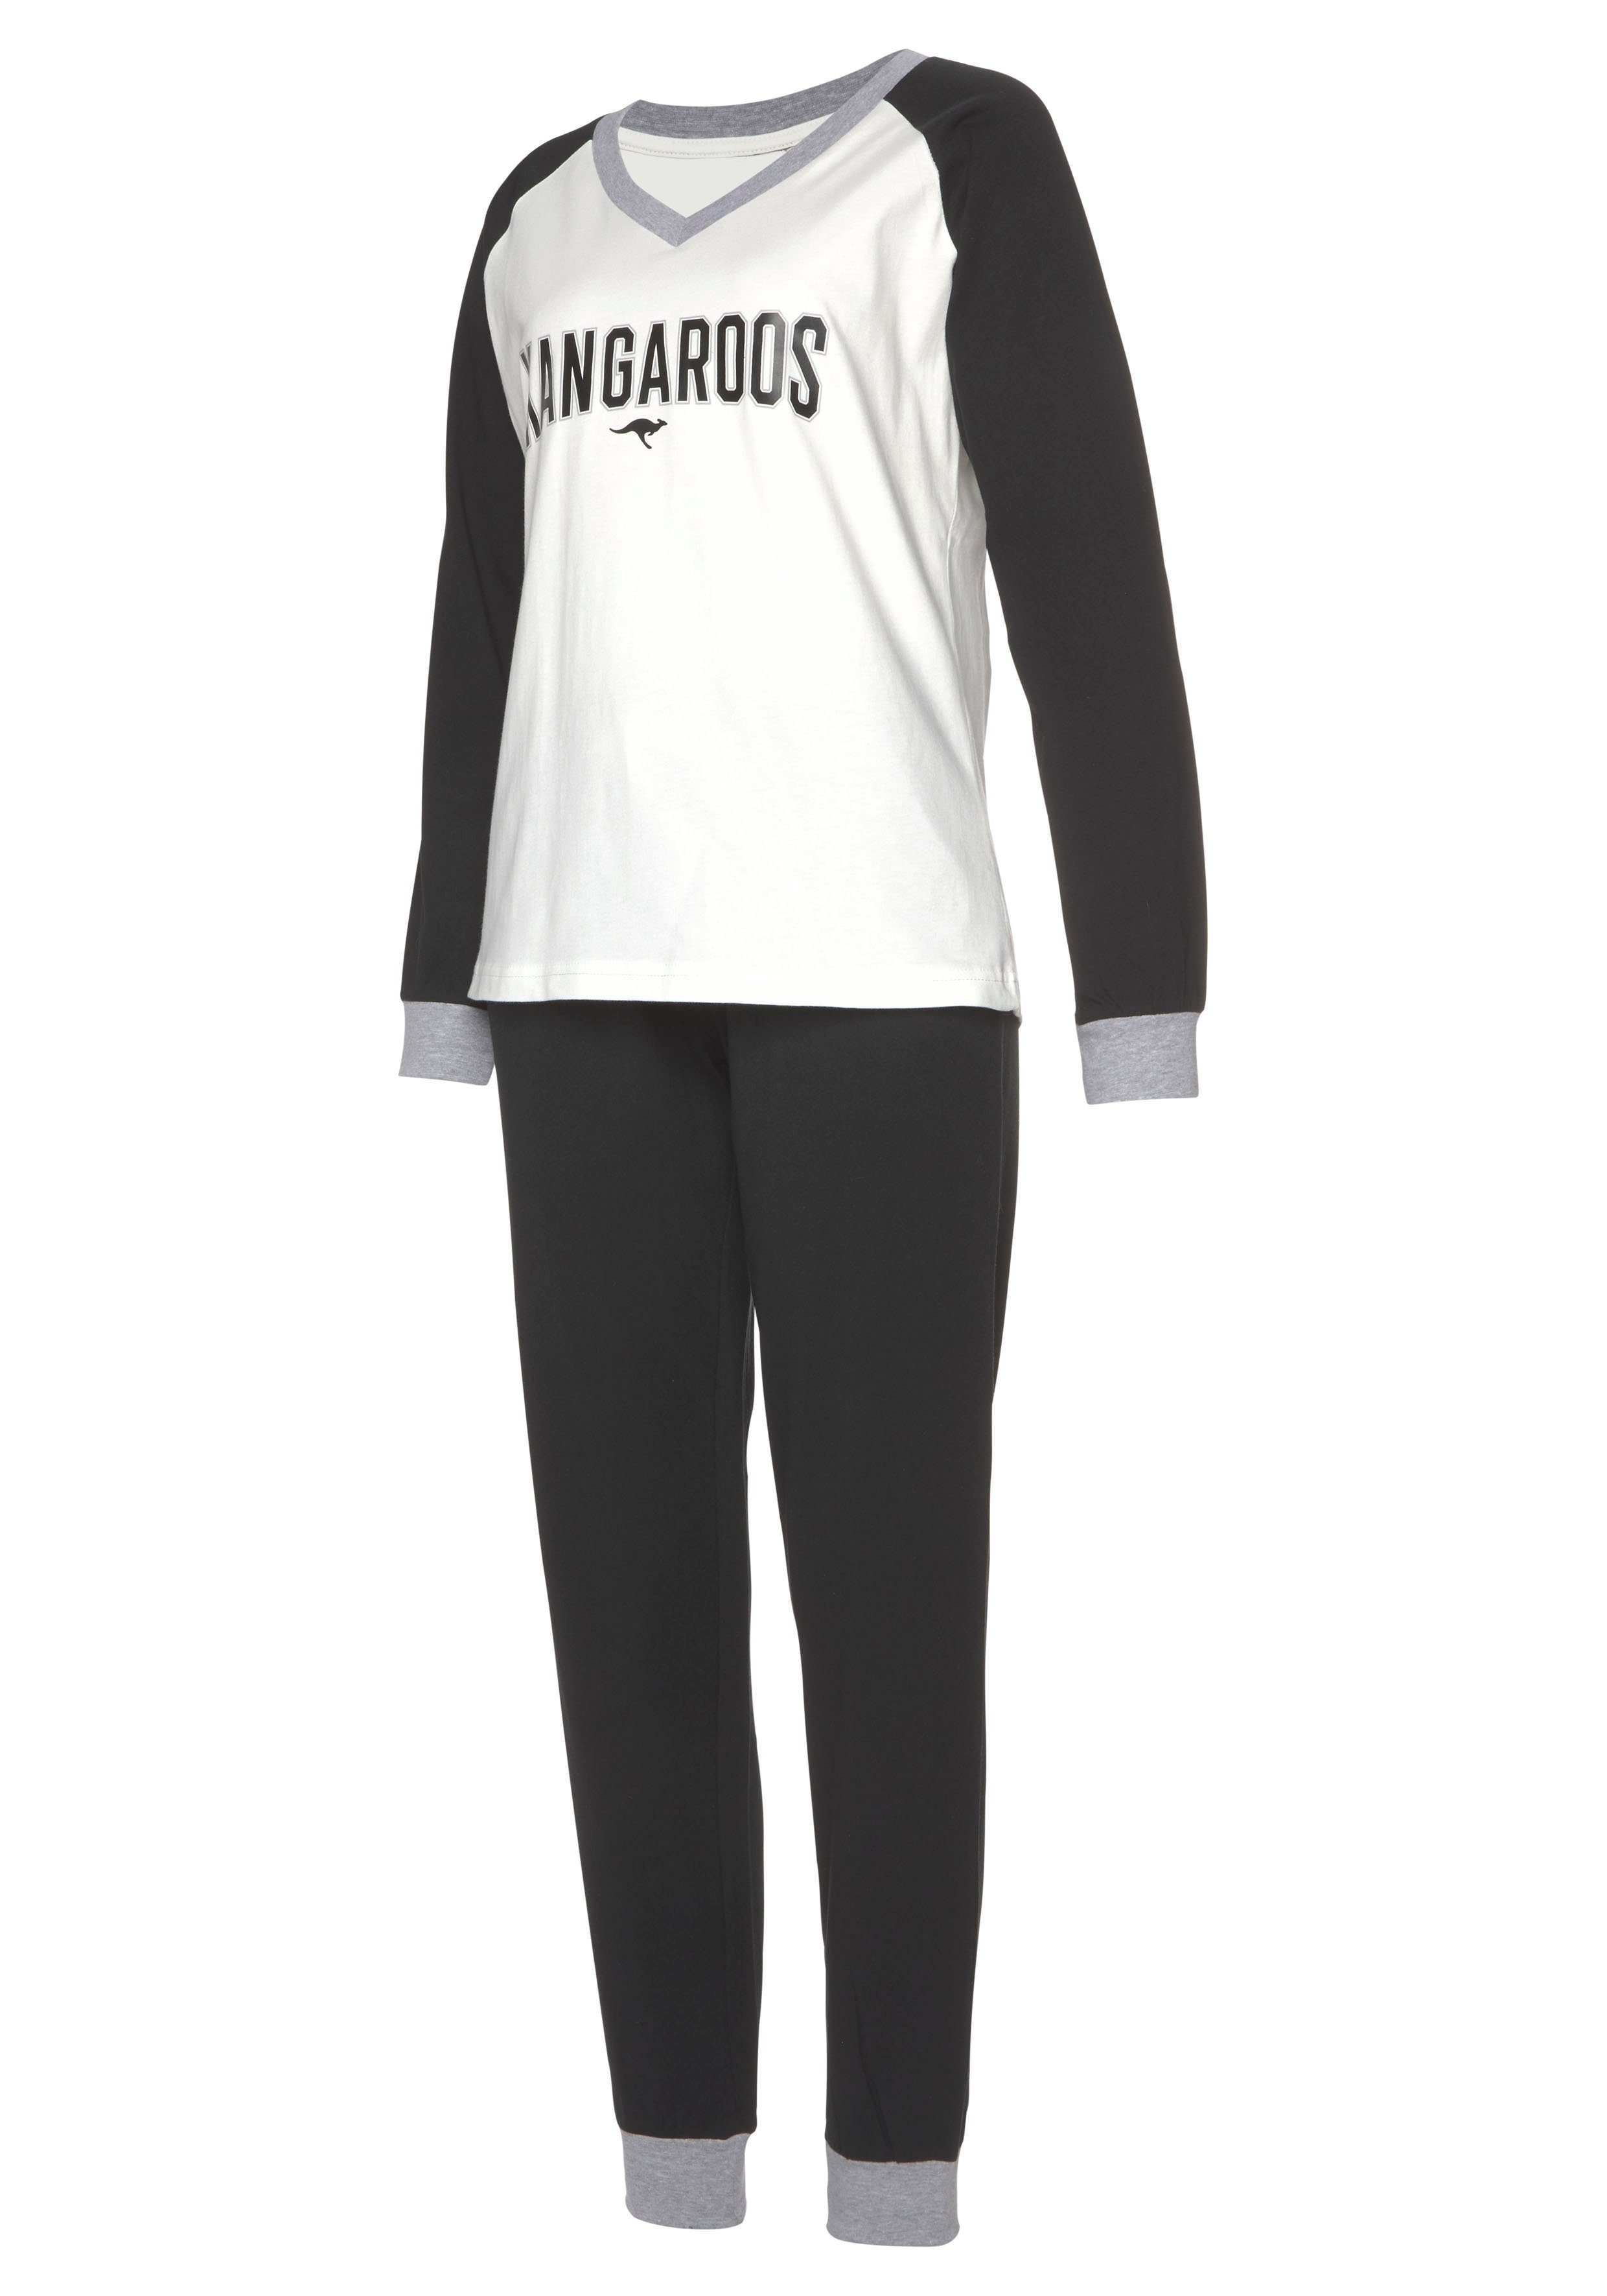 KangaROOS Pyjama (2 tlg., 1 Stück) kontrastfarbenen mit schwarz-weiß Raglanärmeln